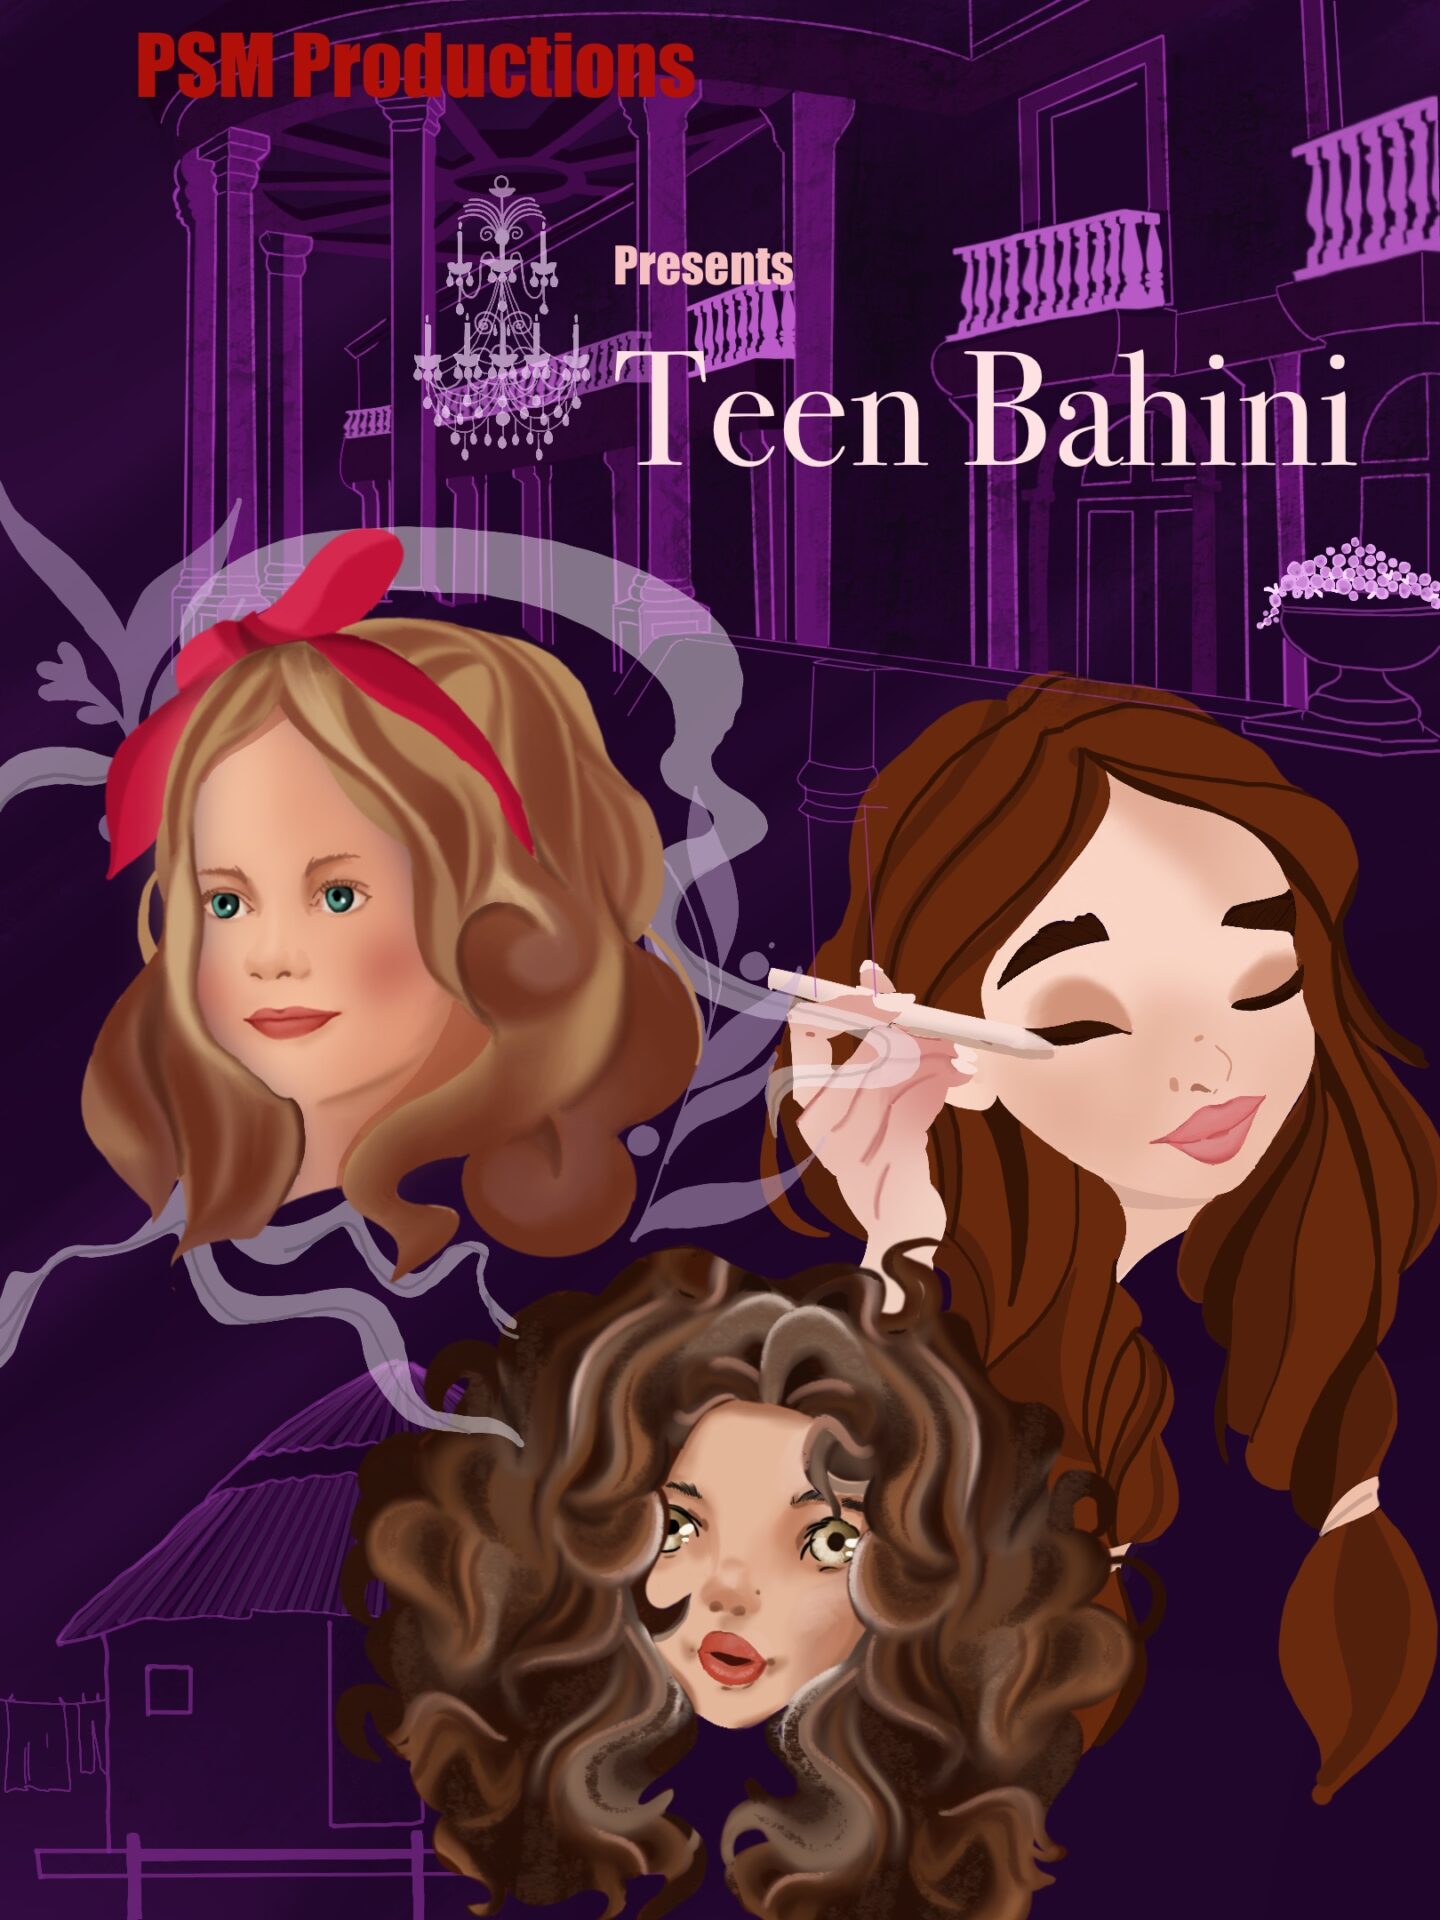 Teen Bahini poster 5.13.22